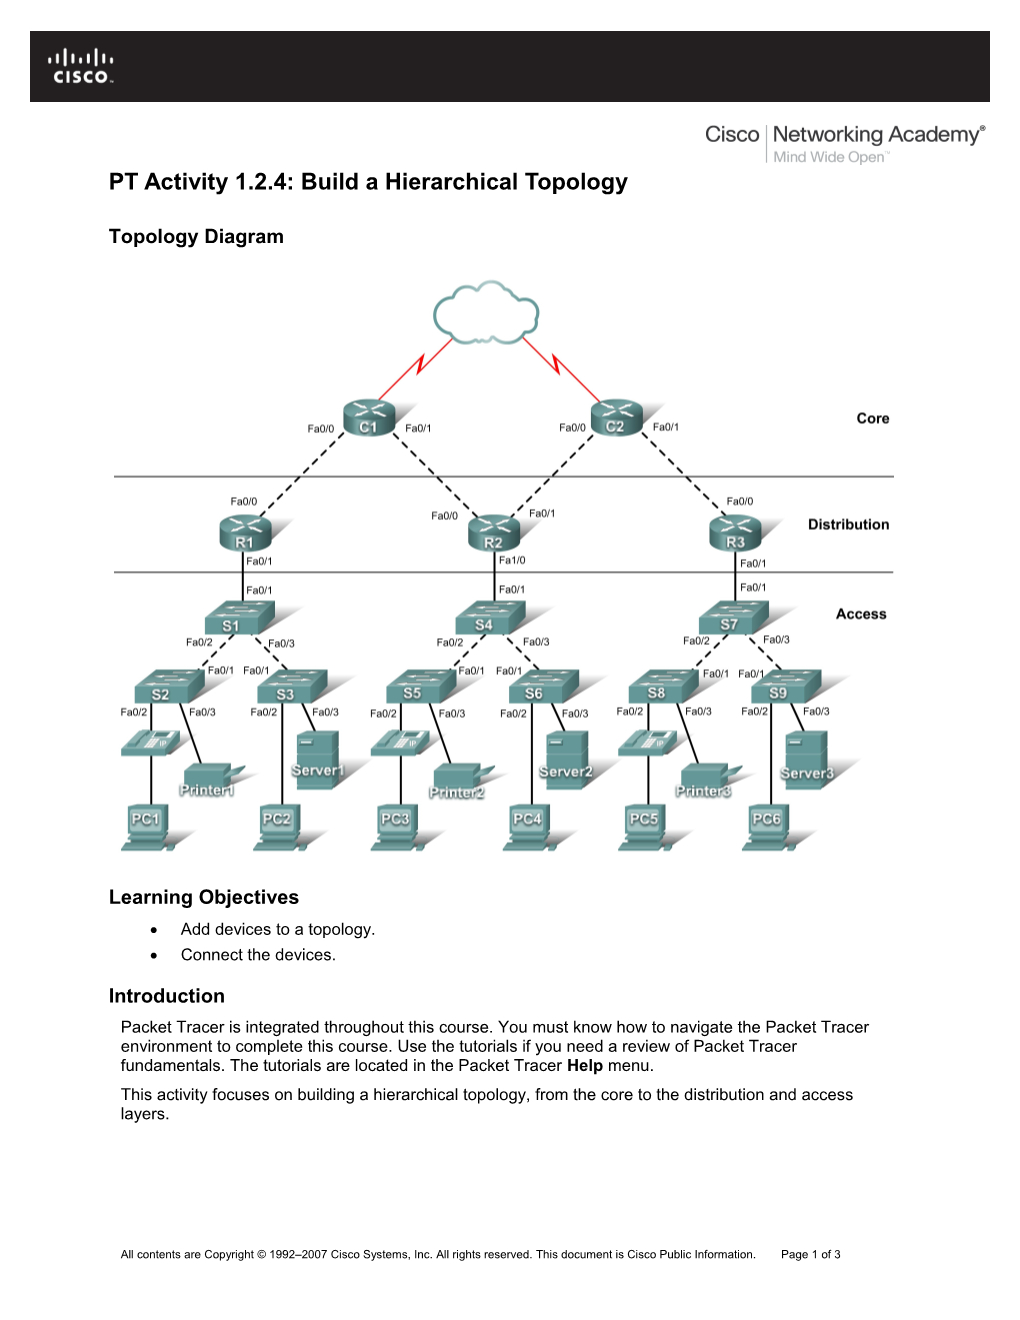 PT Activity 1.2.4: Build a Hierarchical Topology